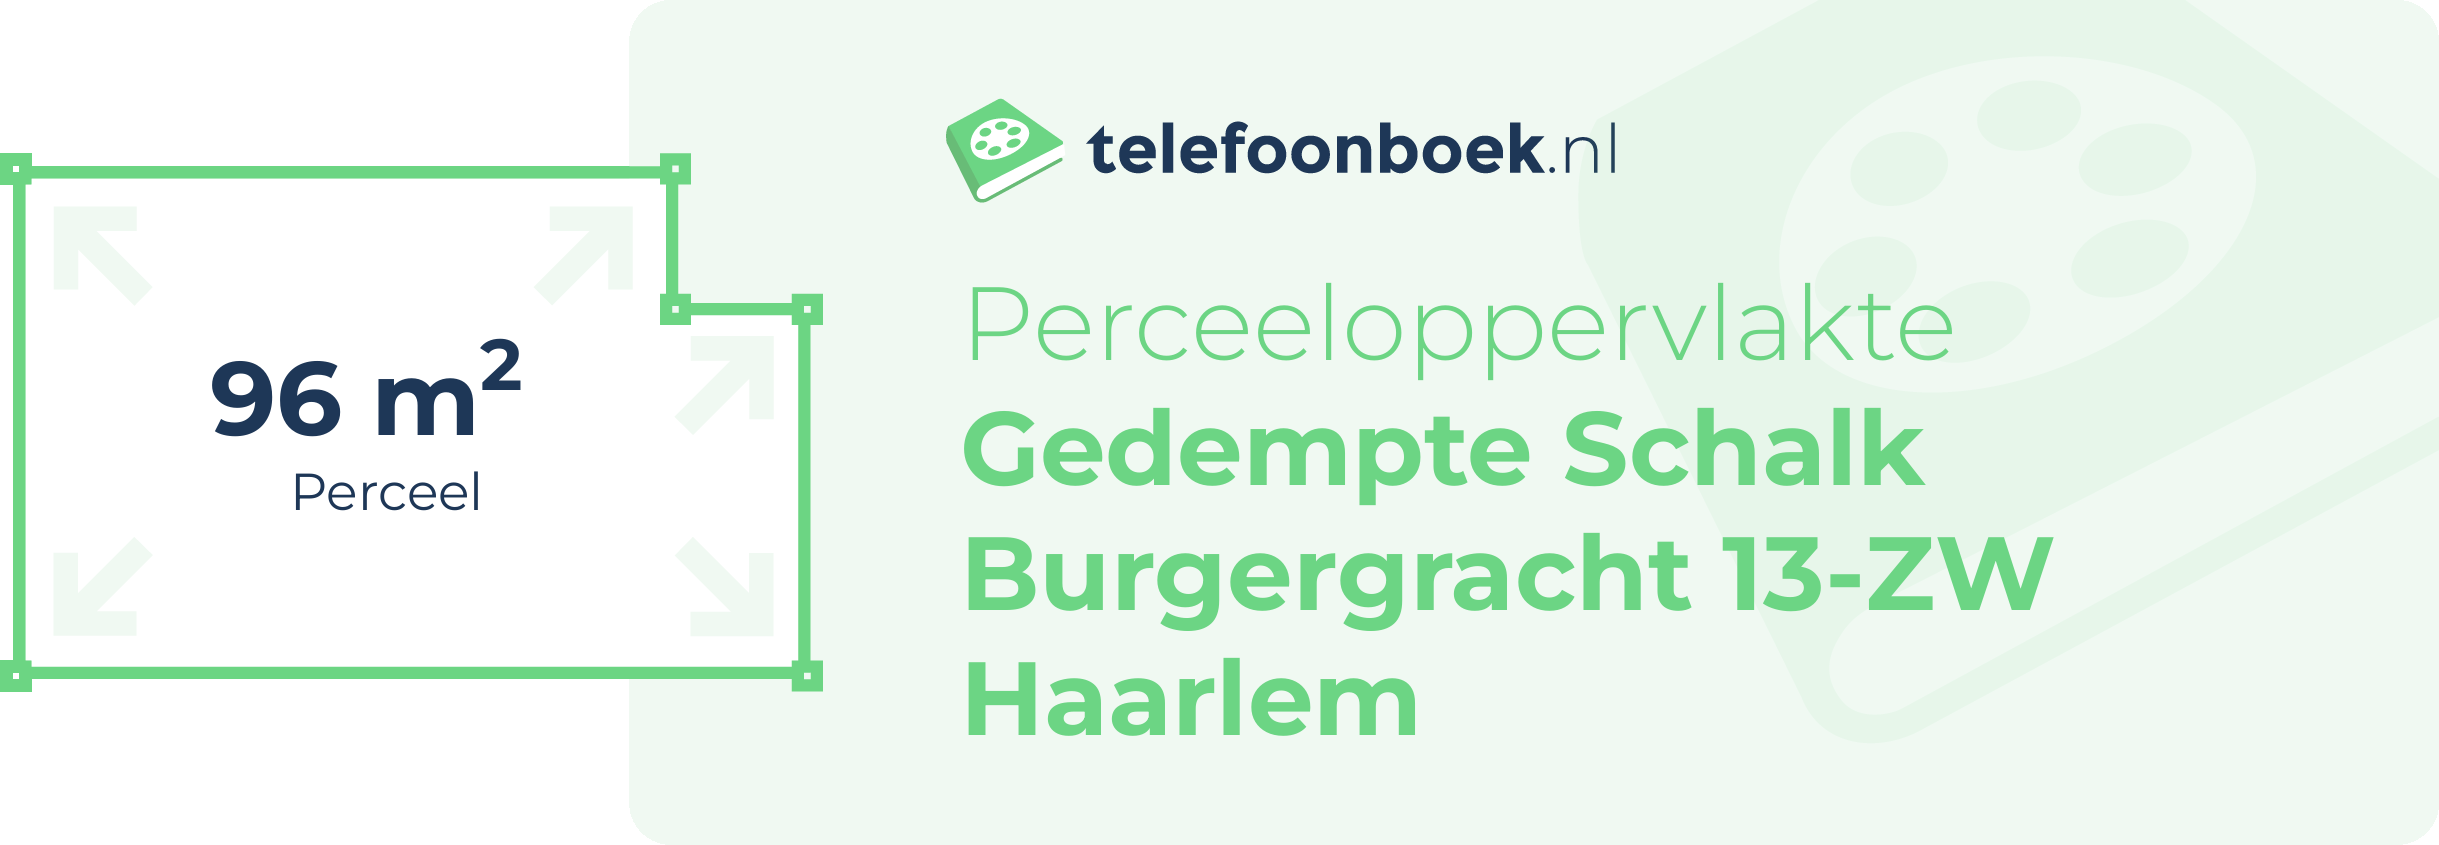 Perceeloppervlakte Gedempte Schalk Burgergracht 13-ZW Haarlem